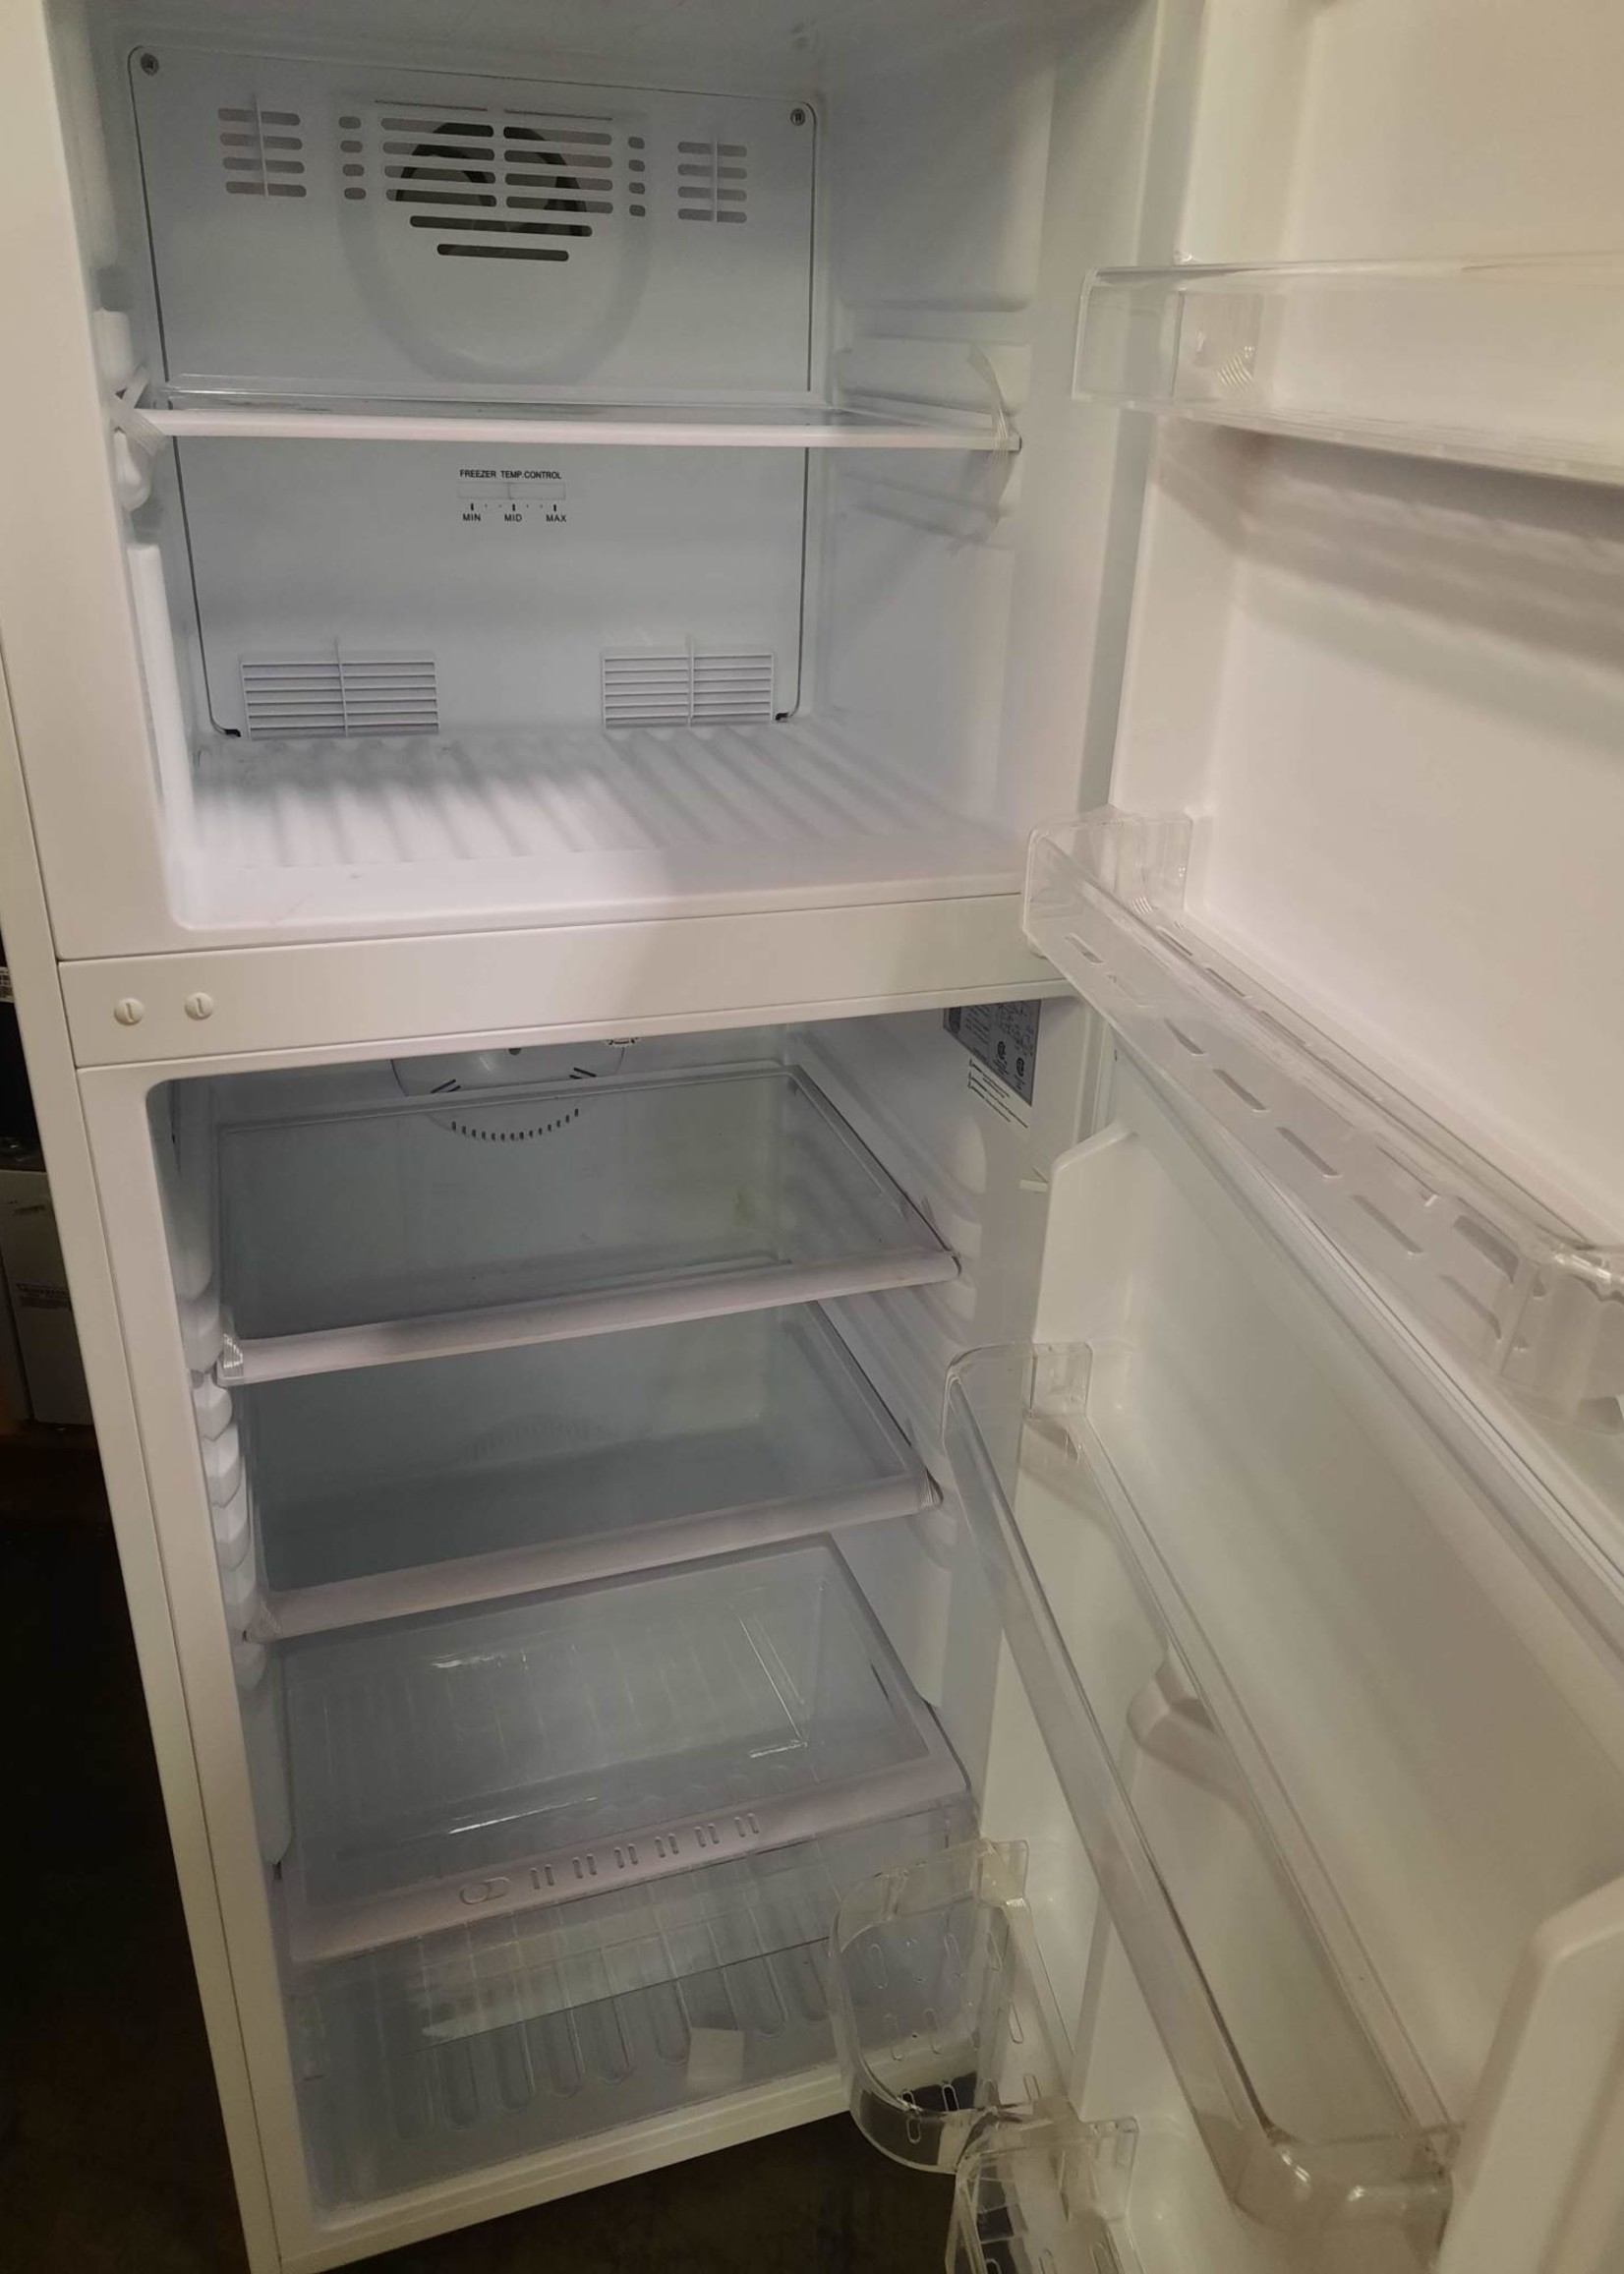 *Haier HA10TG21BSW  9.8 cu. ft. Top Freezer Refrigerator in White